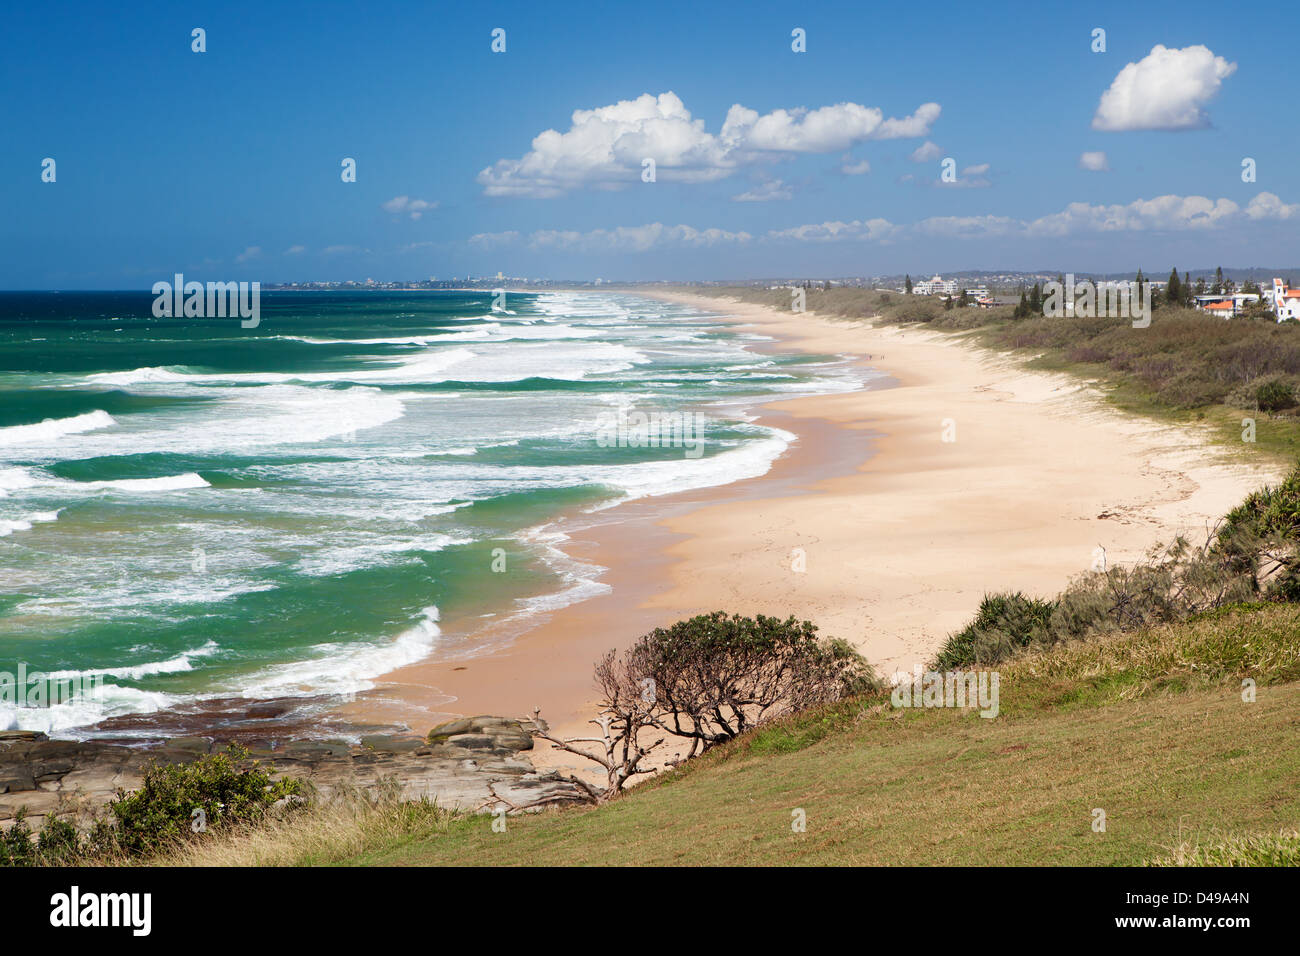 Looking towards Caloundra beach from Point Cartwright on the Mooloolaba headland, Queensland, Australia Stock Photo